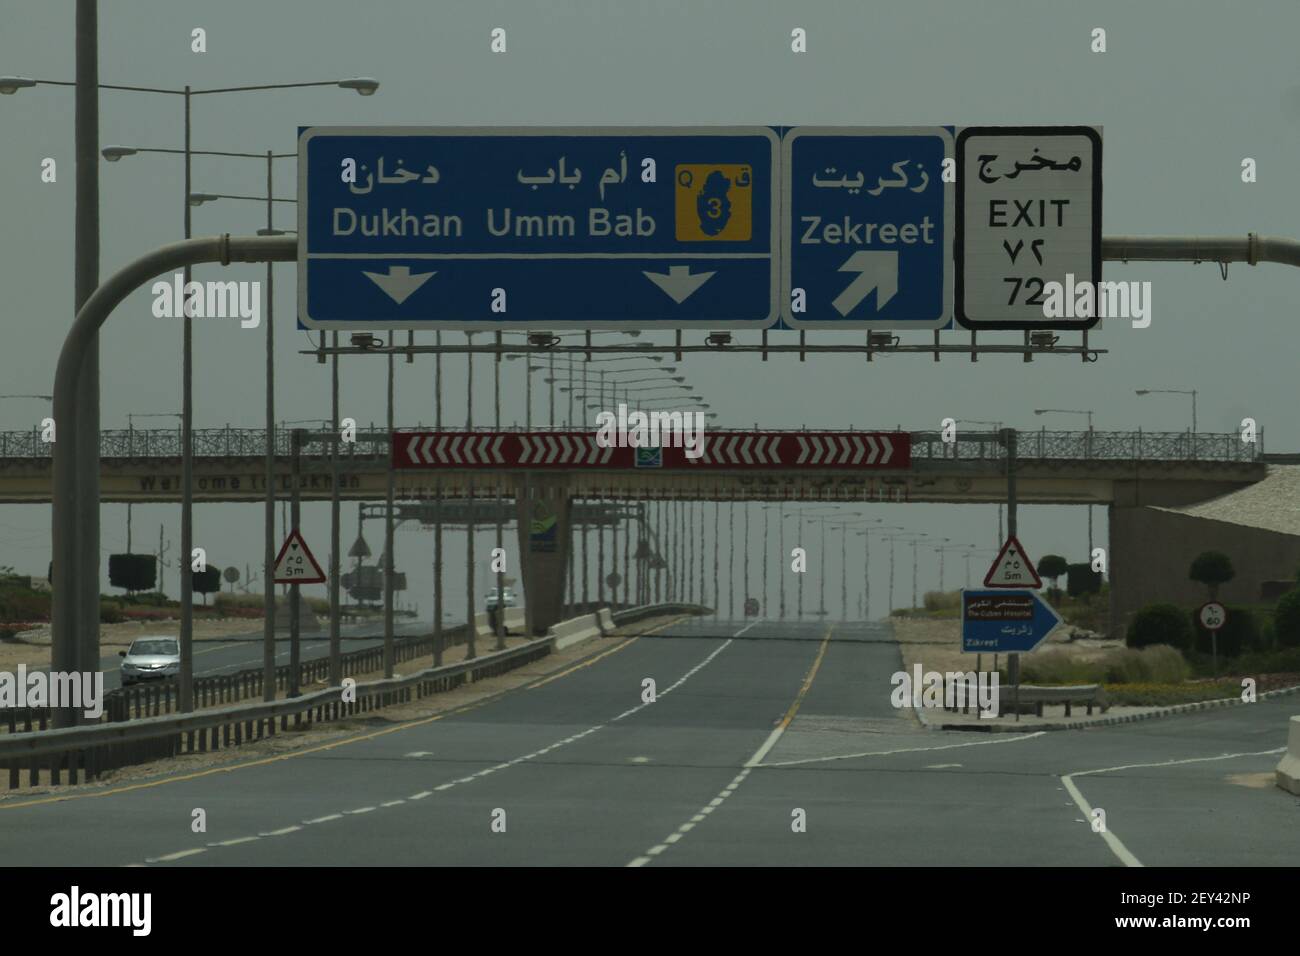 Dukhan, Qatar. Aprile 18 2014. Indicazioni stradali sull'autostrada Doha per Dukhan nel Qatar nord-occidentale. Foto: David Mbiyu /Sipa USA Foto Stock